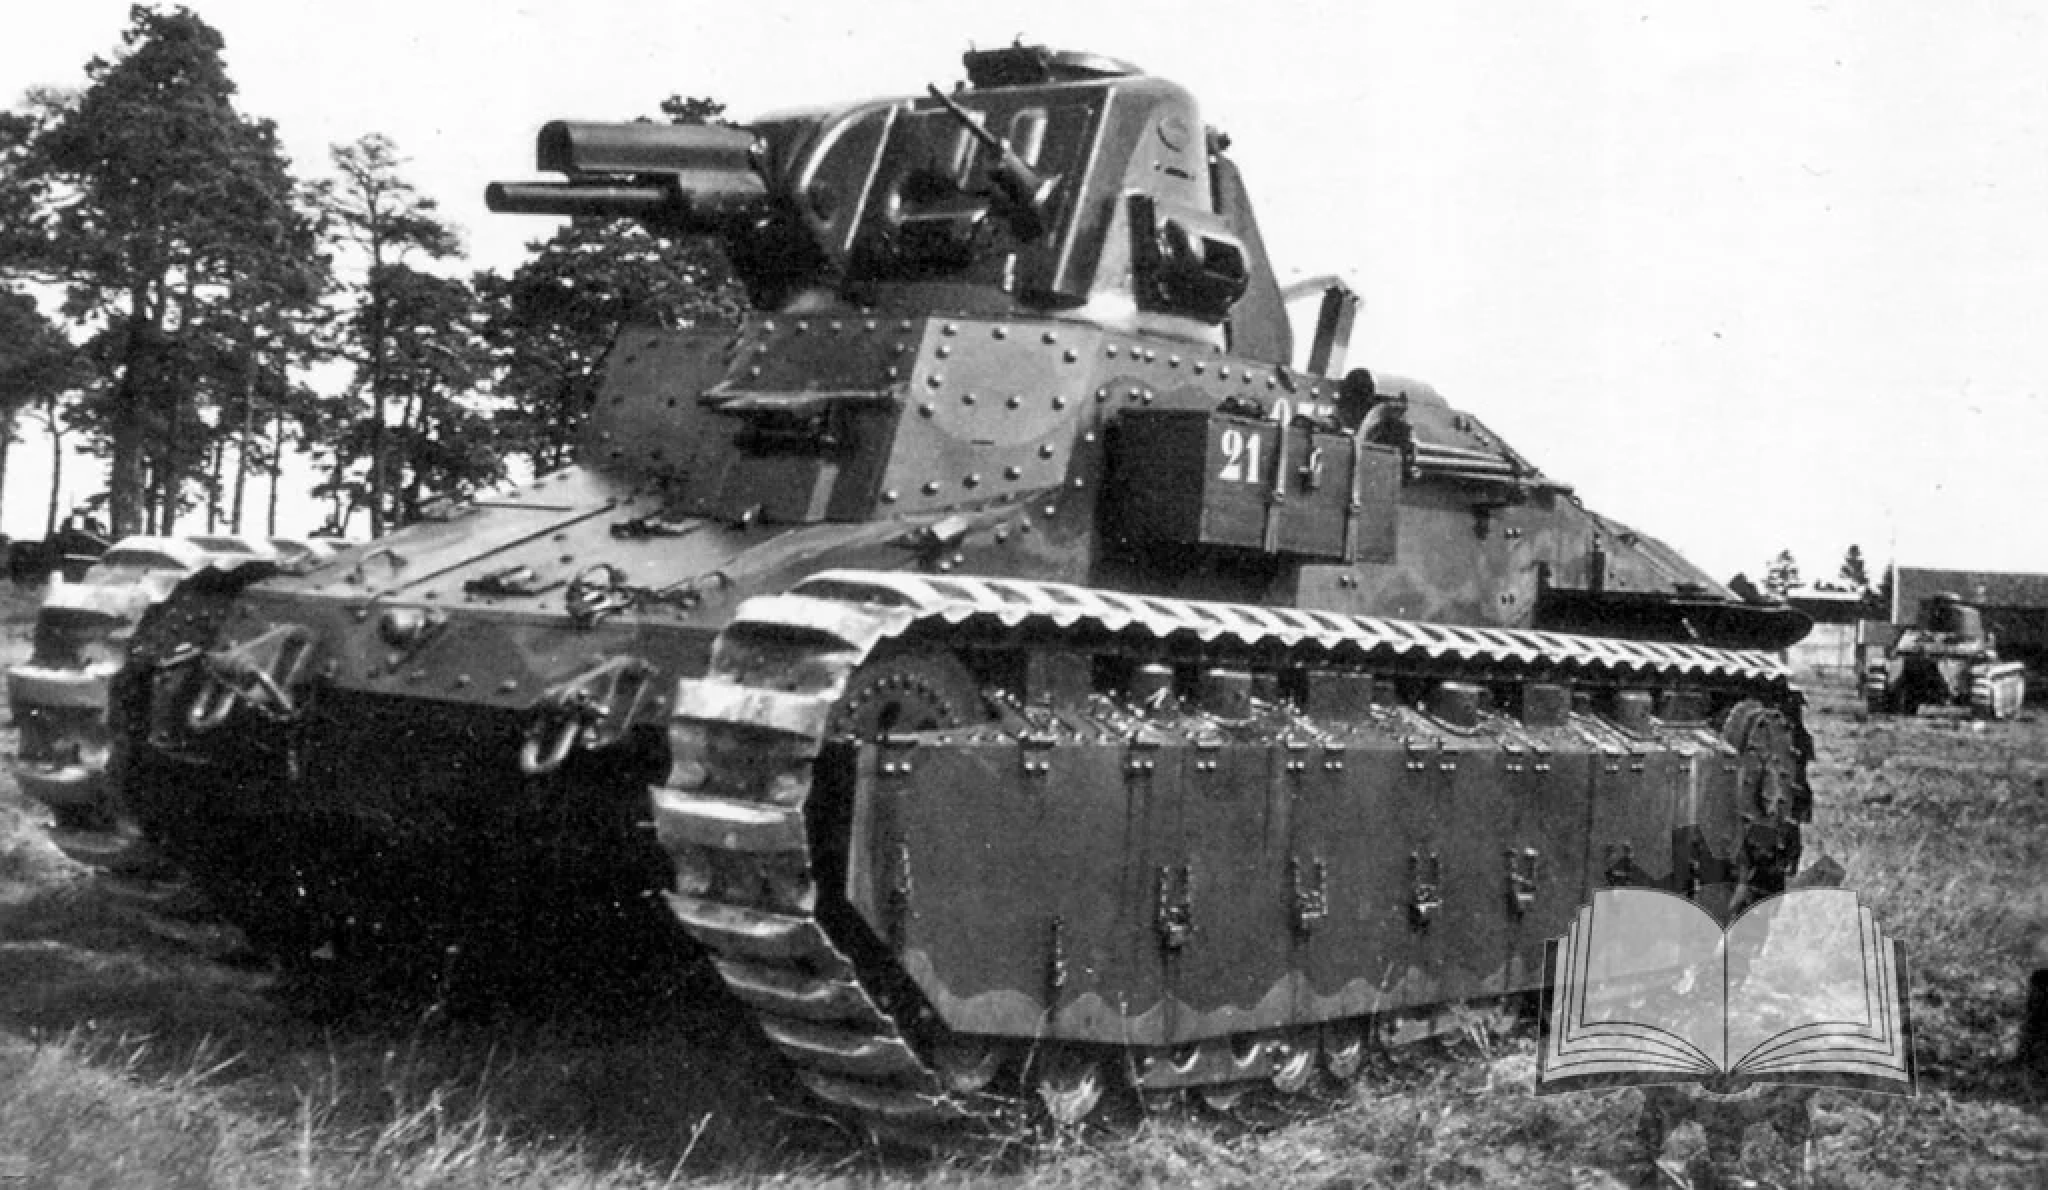 Short chars. Танк d1 Франция. Танк Рено д1. Char d1 танк. Французский танк д1.